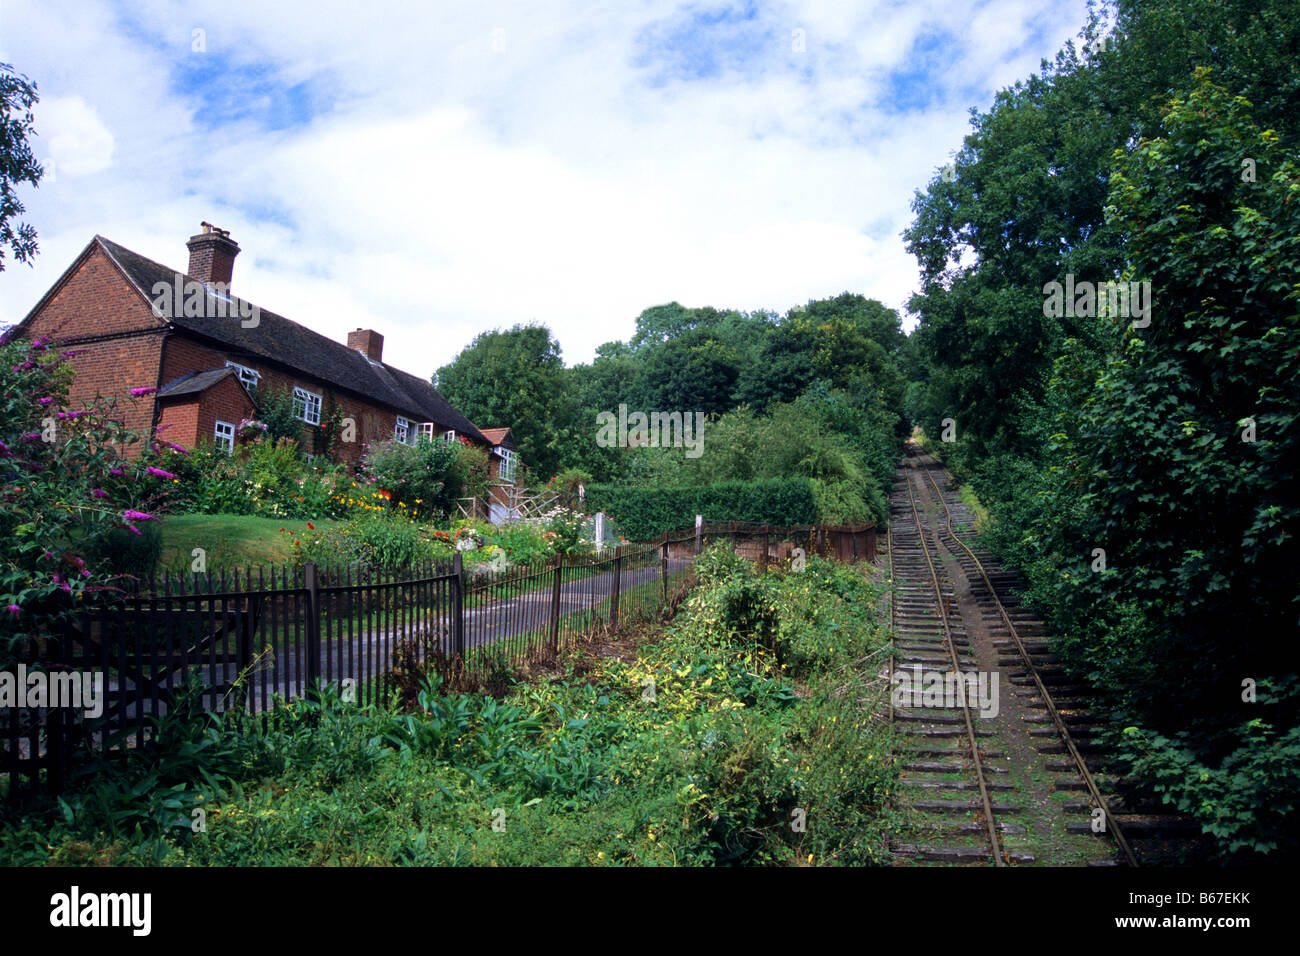 Old railway line in a village near Shrewsbury, Shropshire, UK Stock Photo